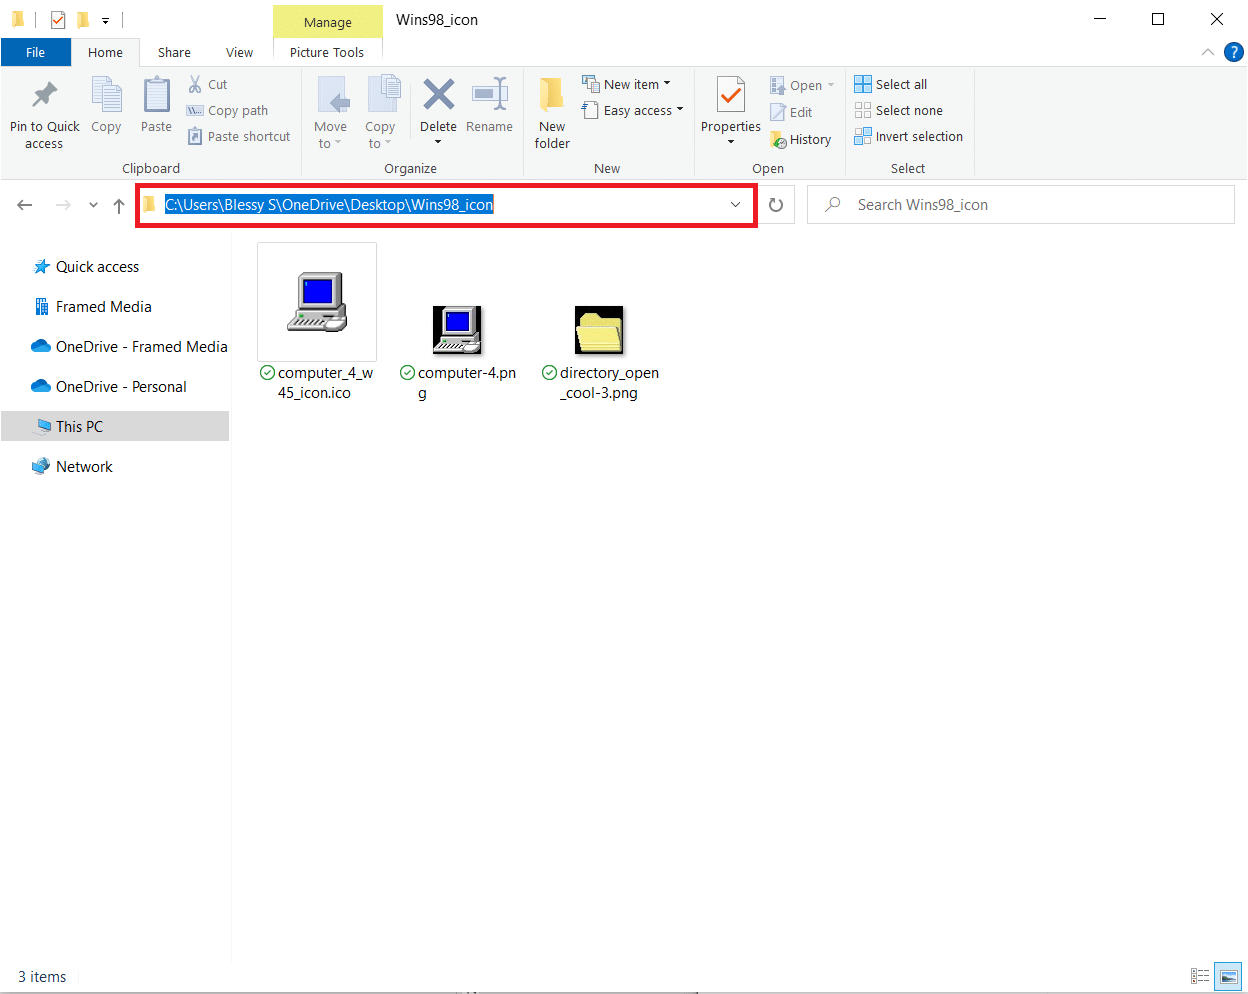 скопируйте местоположение пути, нажав клавиши Ctrl и C. Как установить значки Windows 98